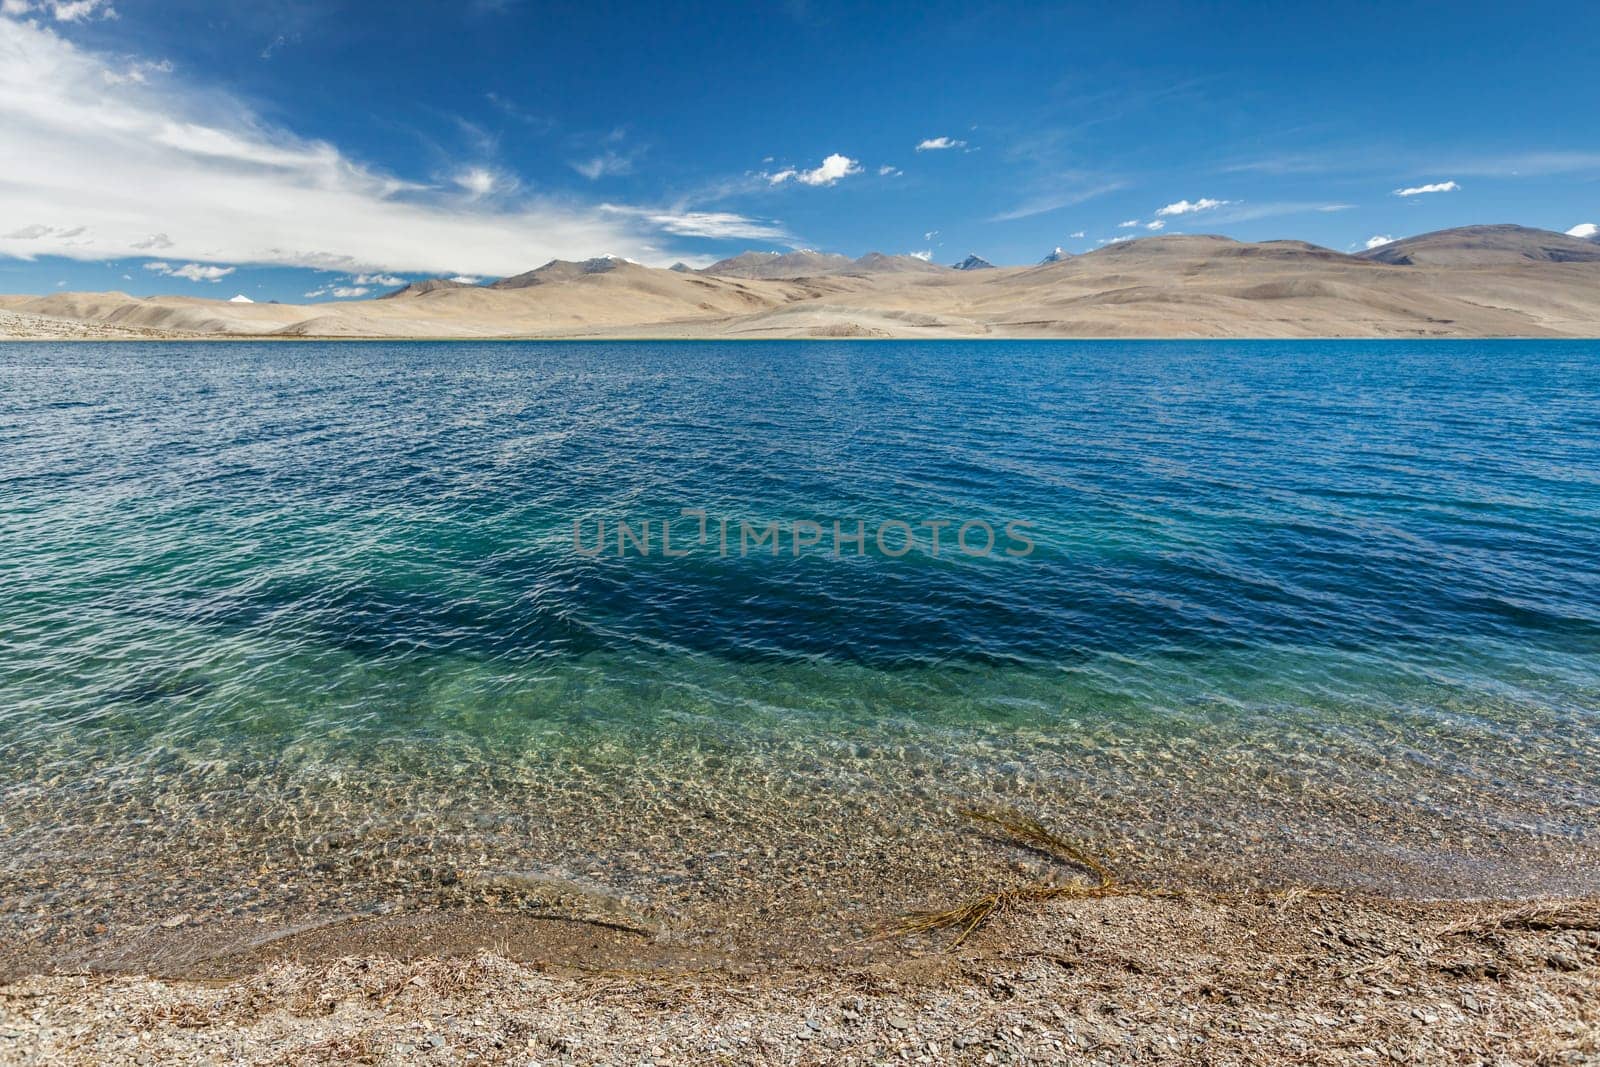 Tso Moriri lake in Himalayas, Ladakh, India by dimol